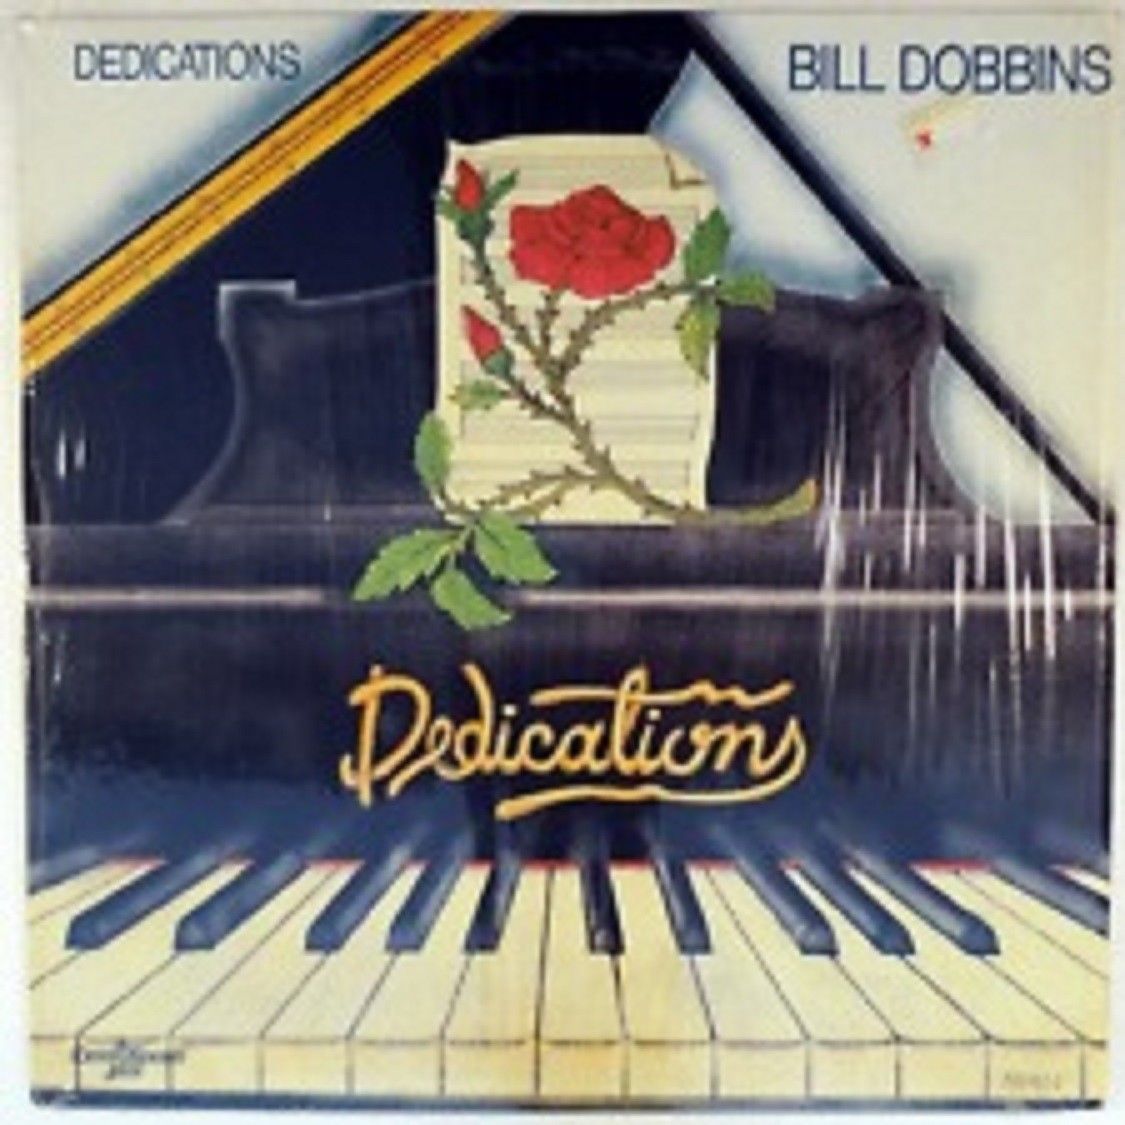 BILL DOBBINS - Dedications cover 